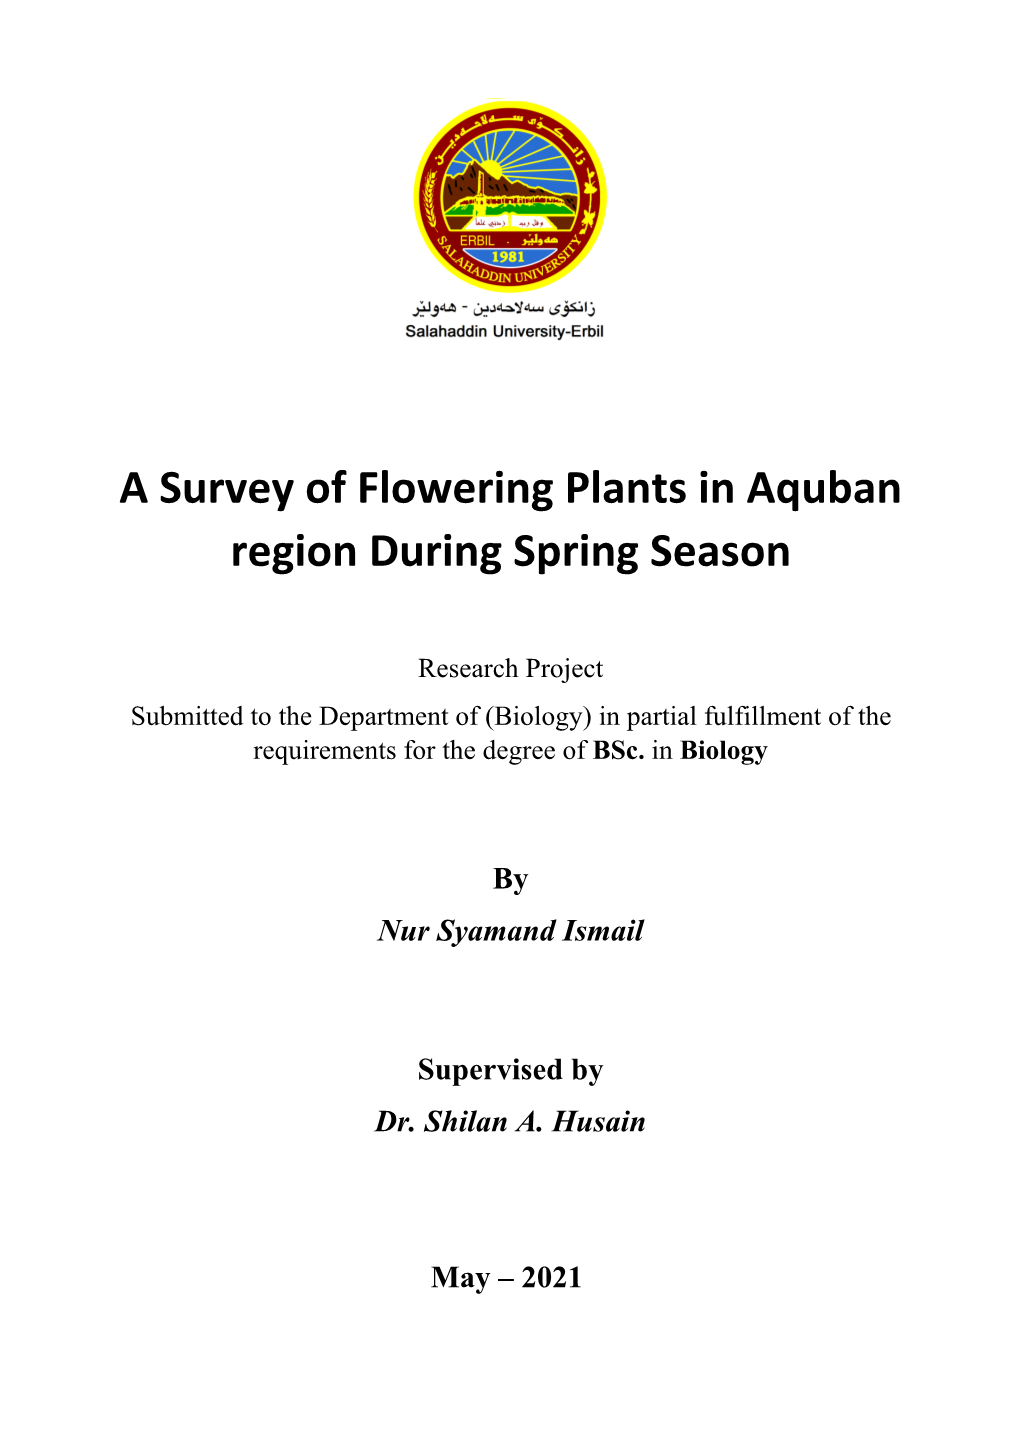 A Survey of Flowering Plants in Aquban Region During Spring Season